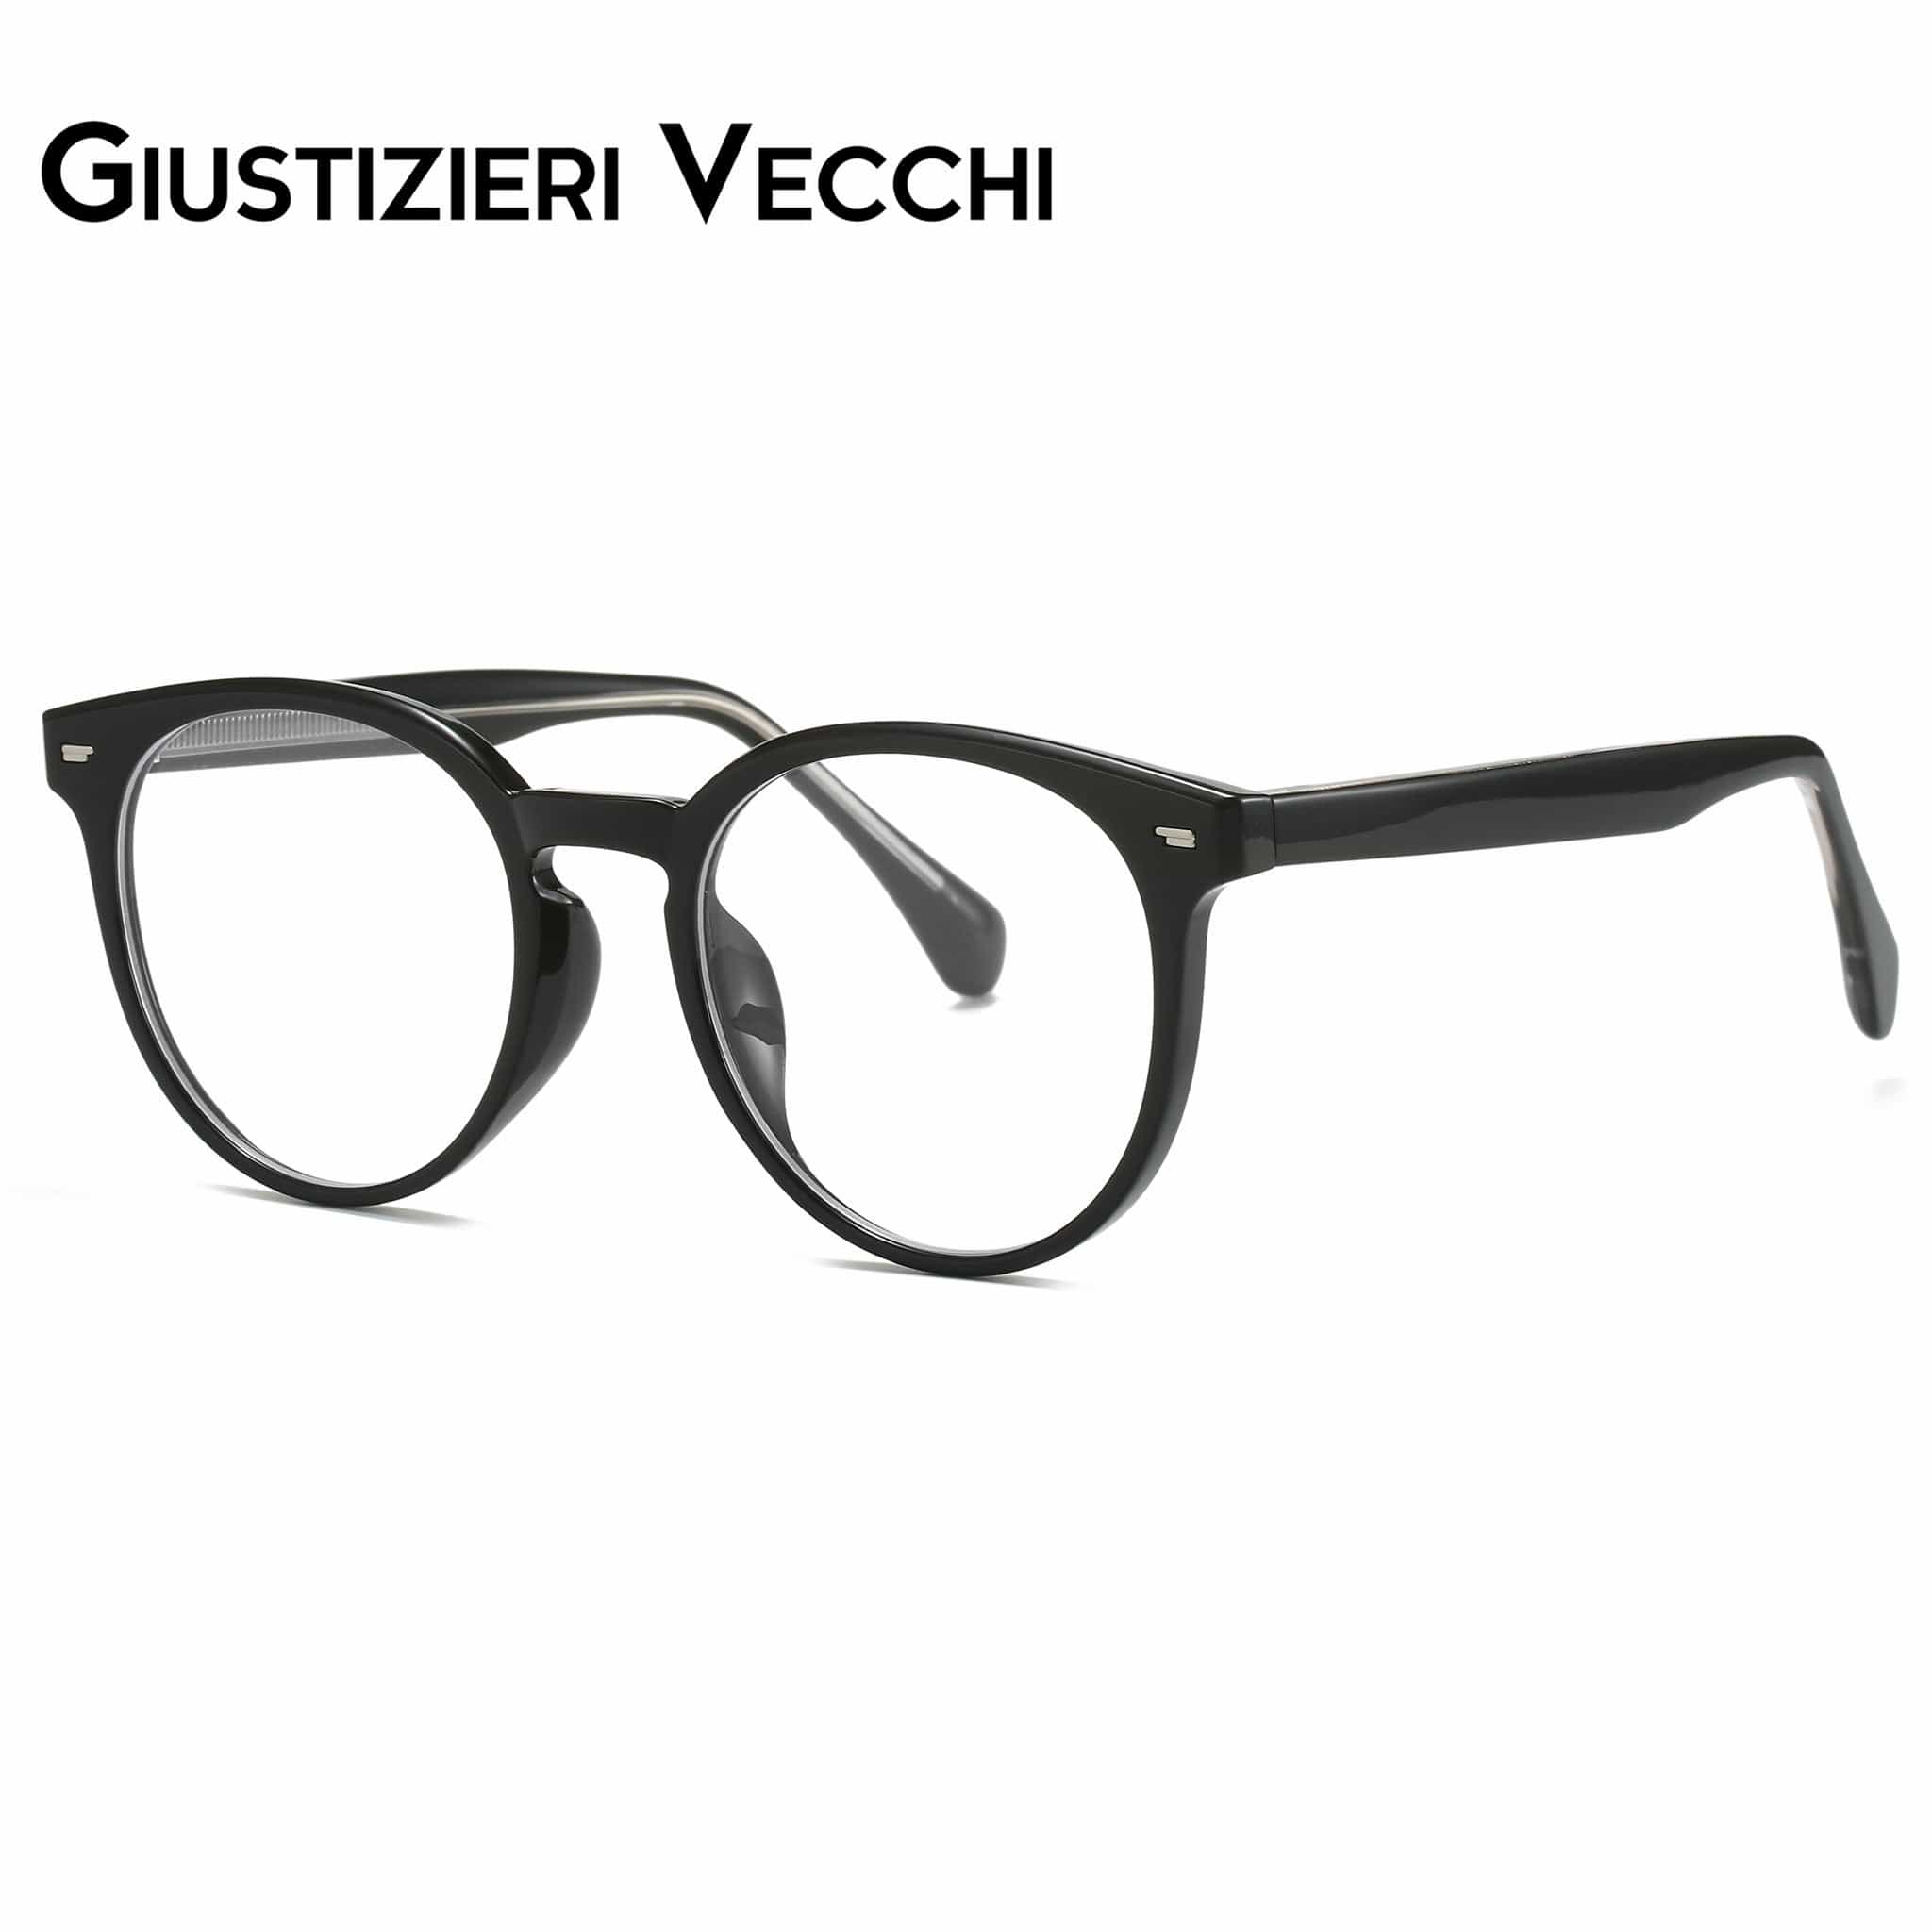 GIUSTIZIERI VECCHI Eyeglasses NeonBloom Uno